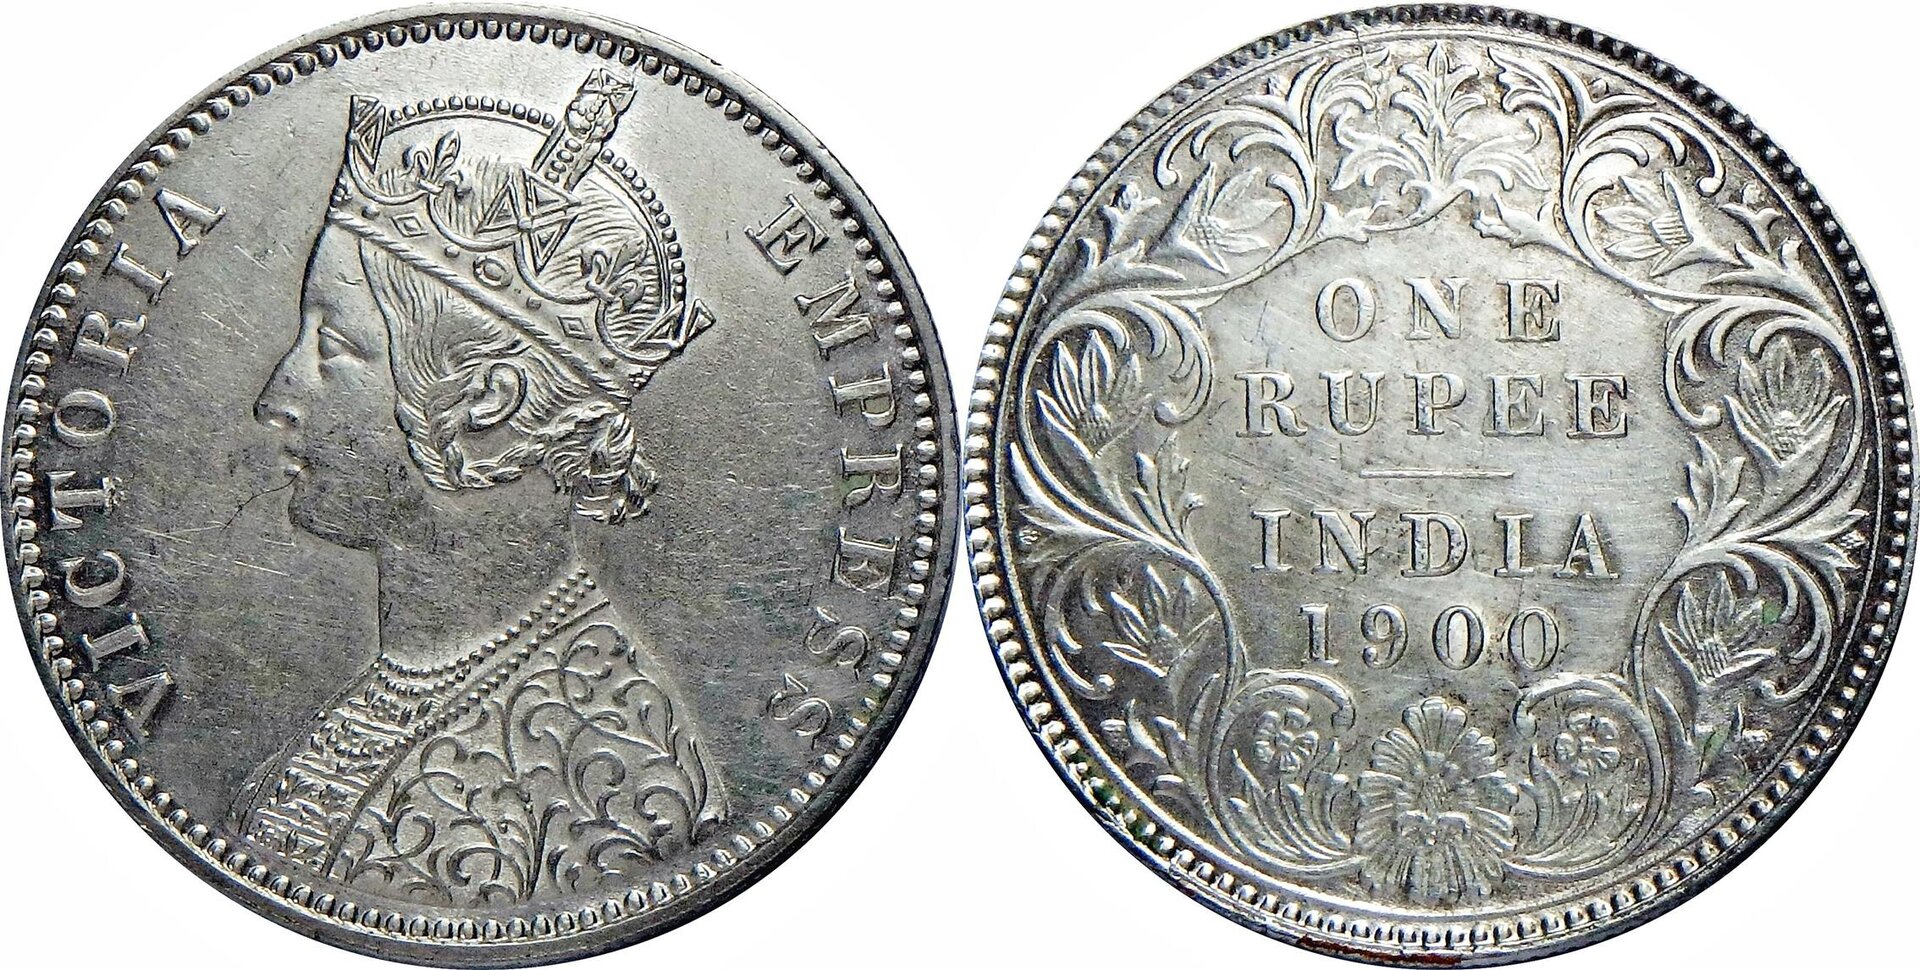 1900 C GB-IN 1 r.jpg